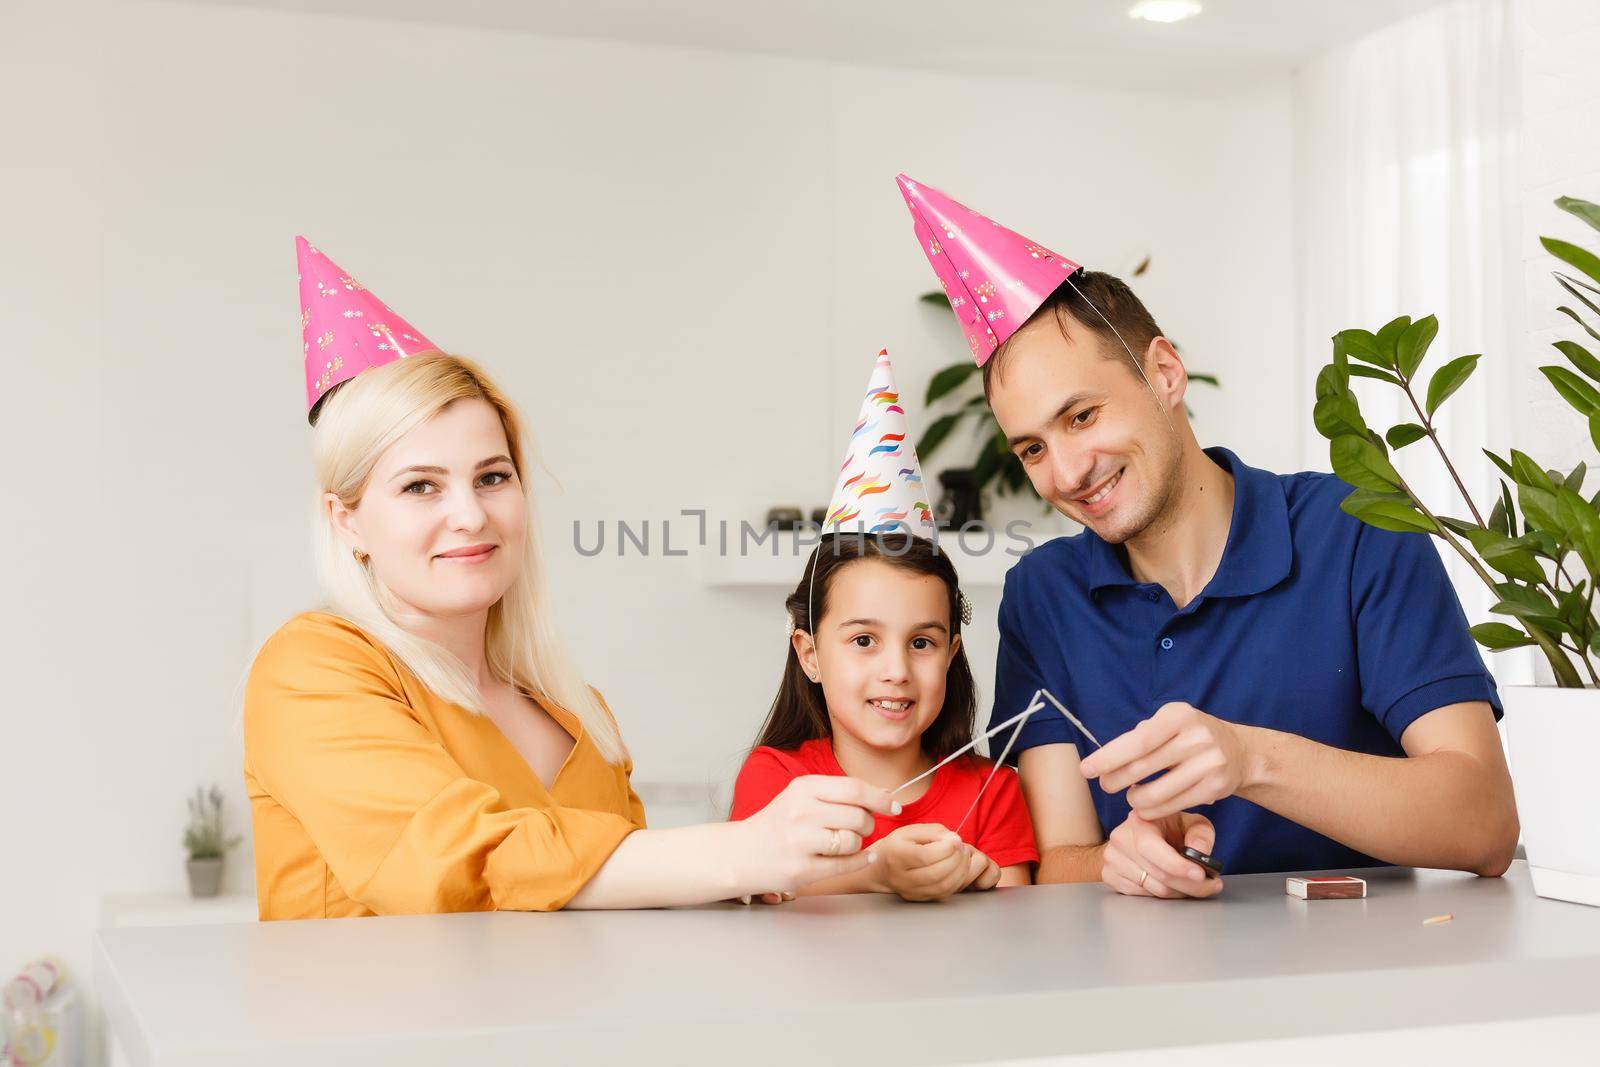 Happy family celebrating birthday via internet in quarantine time, self-isolation and family values, online birthday party by Andelov13